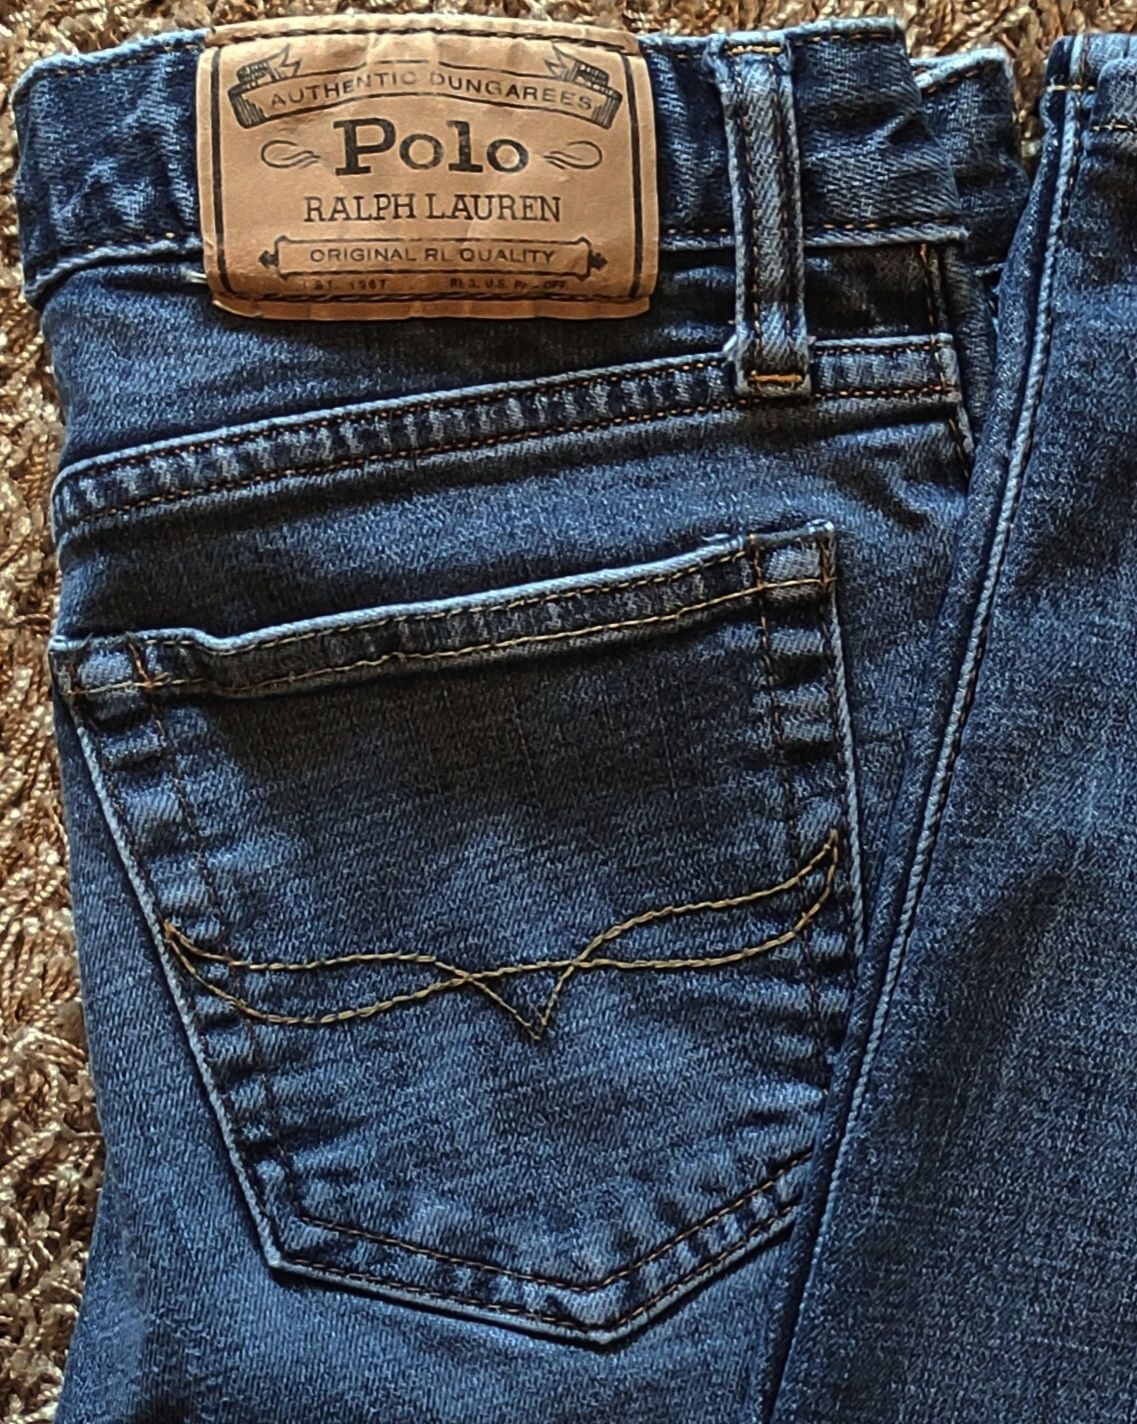 Ralph Lauren  spodnie jeansowe S/M